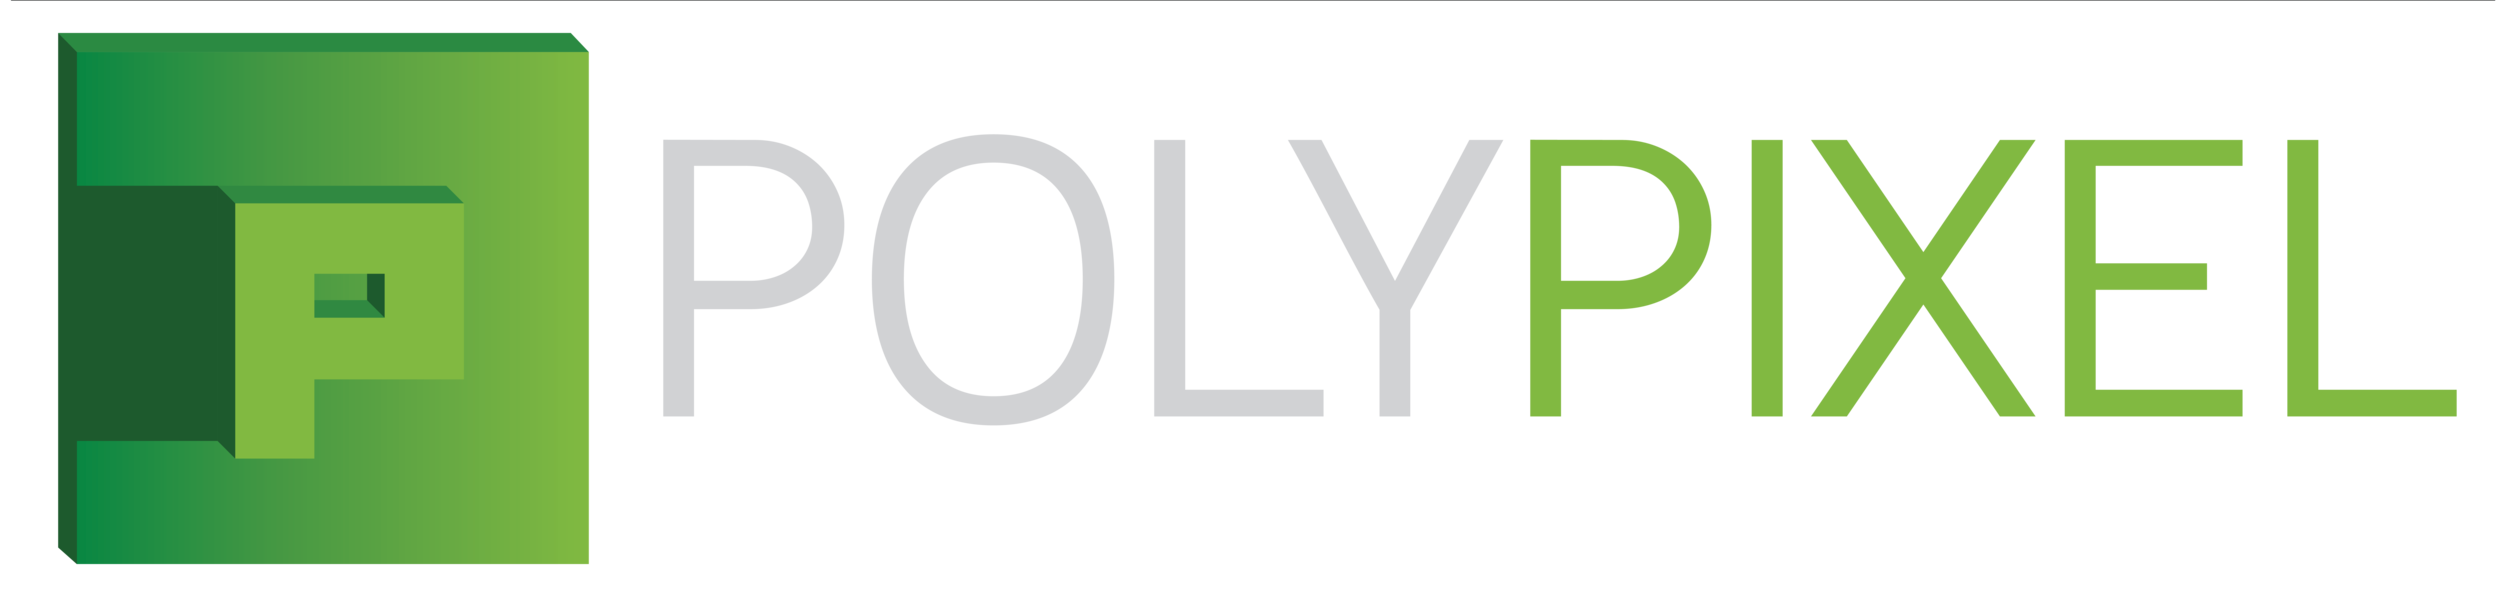 PolyPixel_Logo (1).PNG